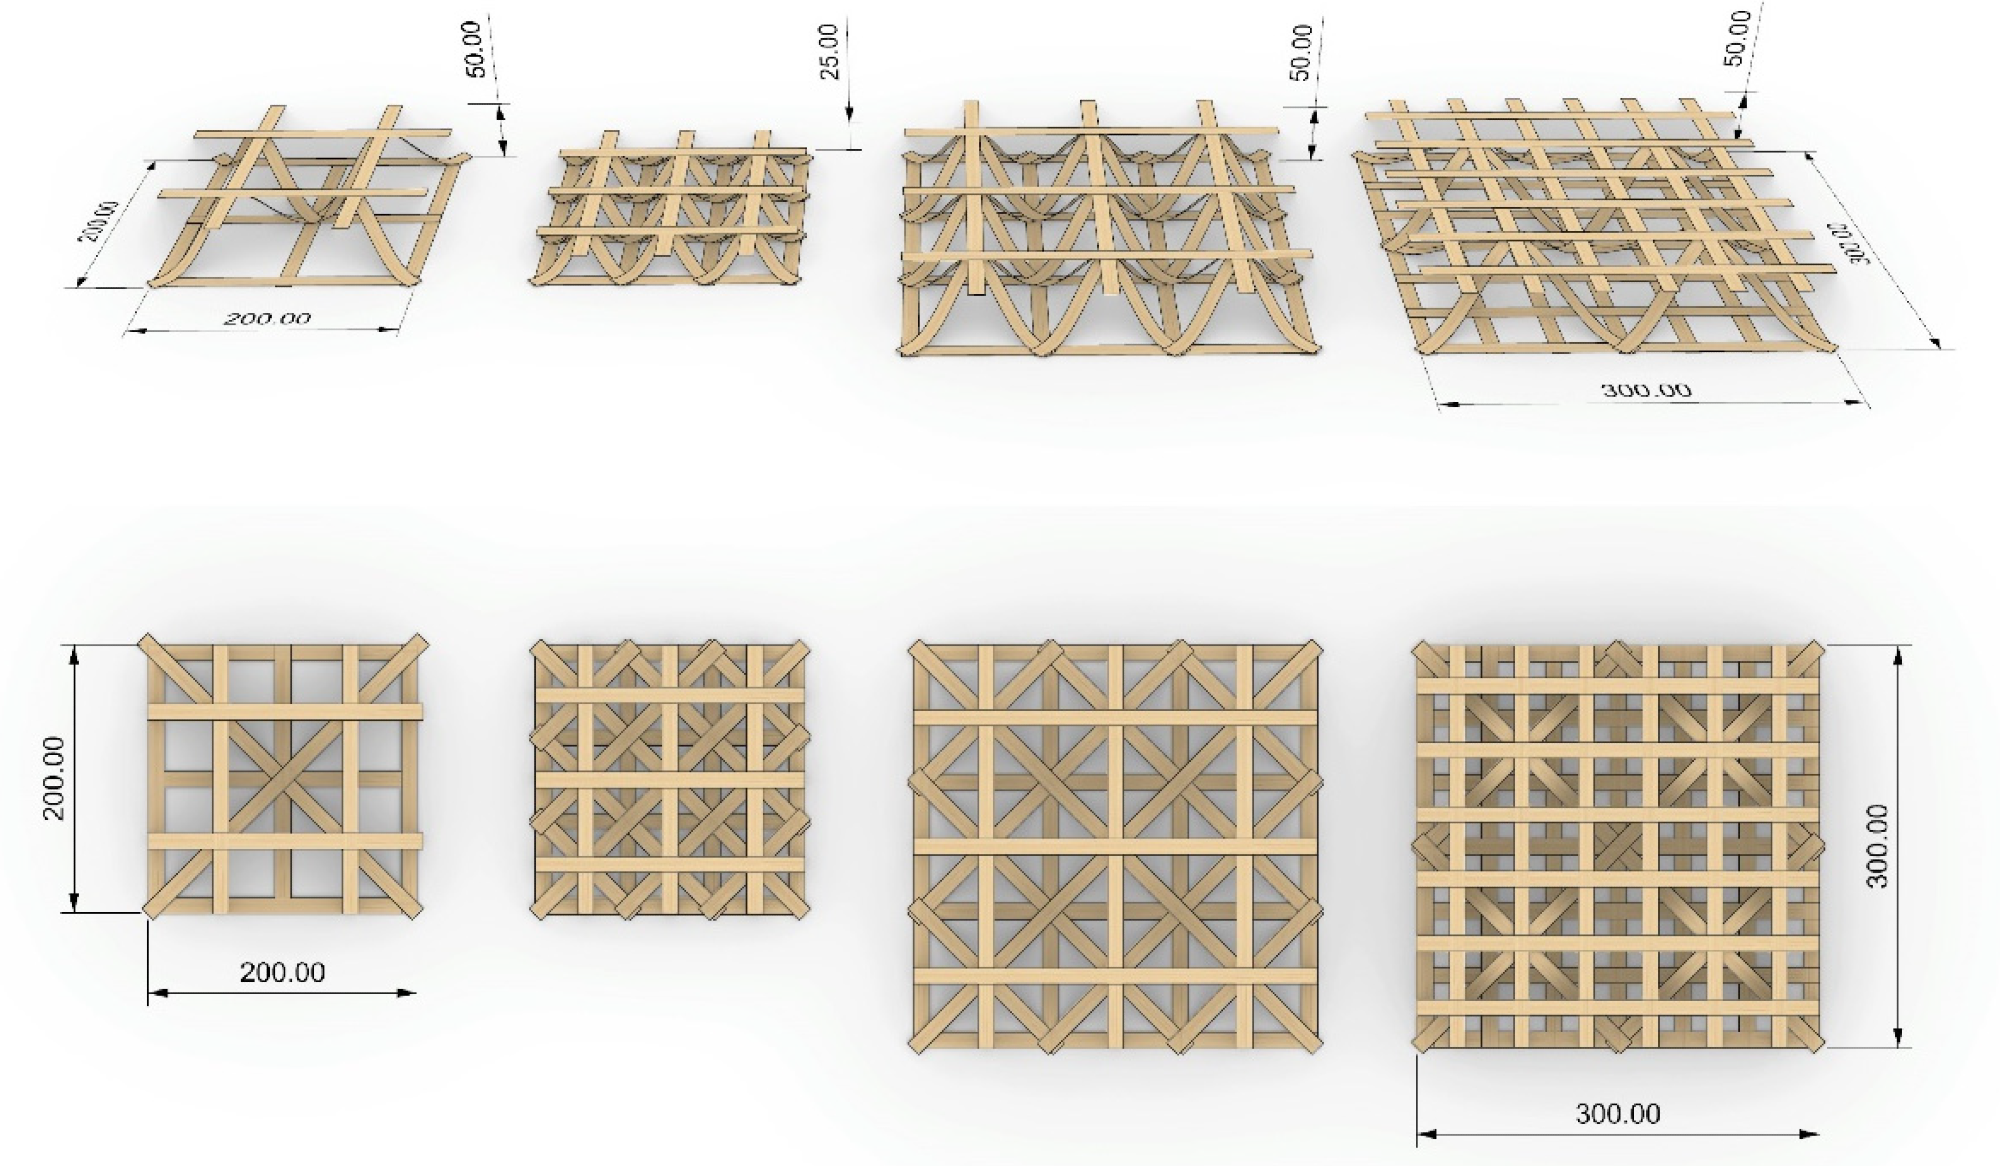 3D trellis layout studies (dimensions in mm).